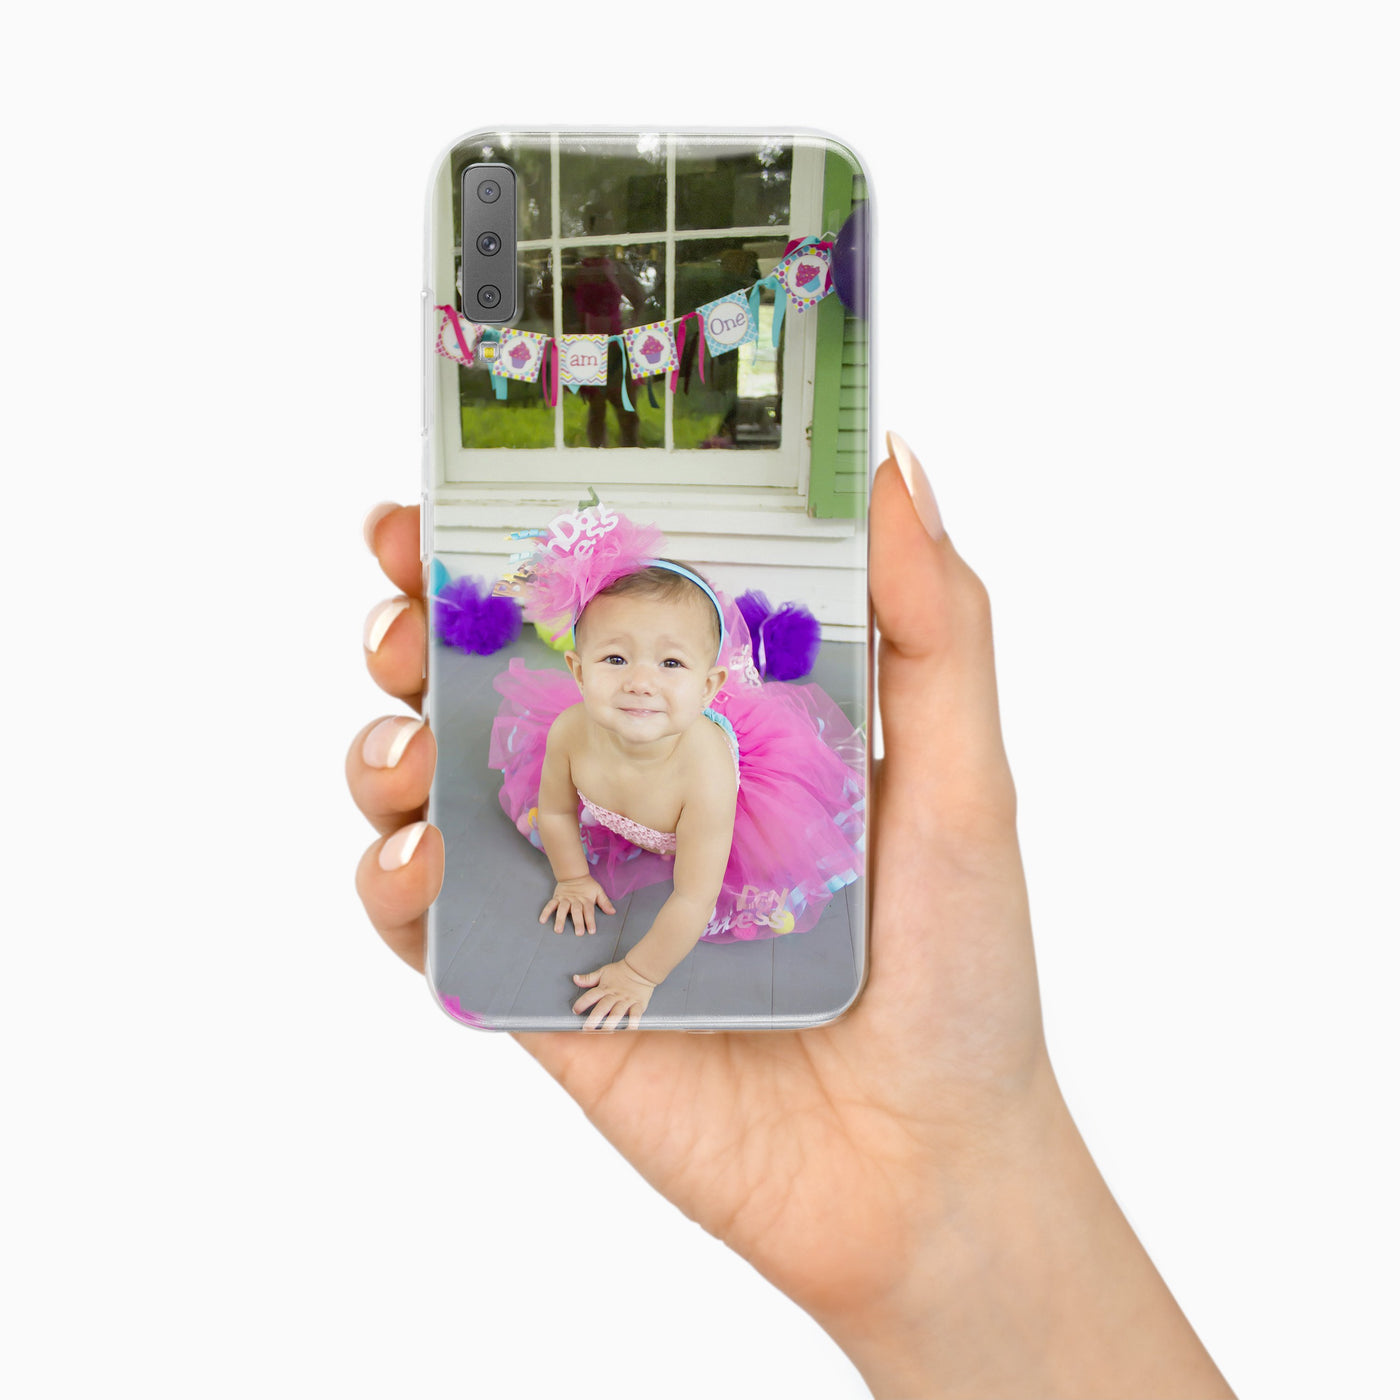 Samsung Galaxy A7 2018 Handyhülle selbst gestalten